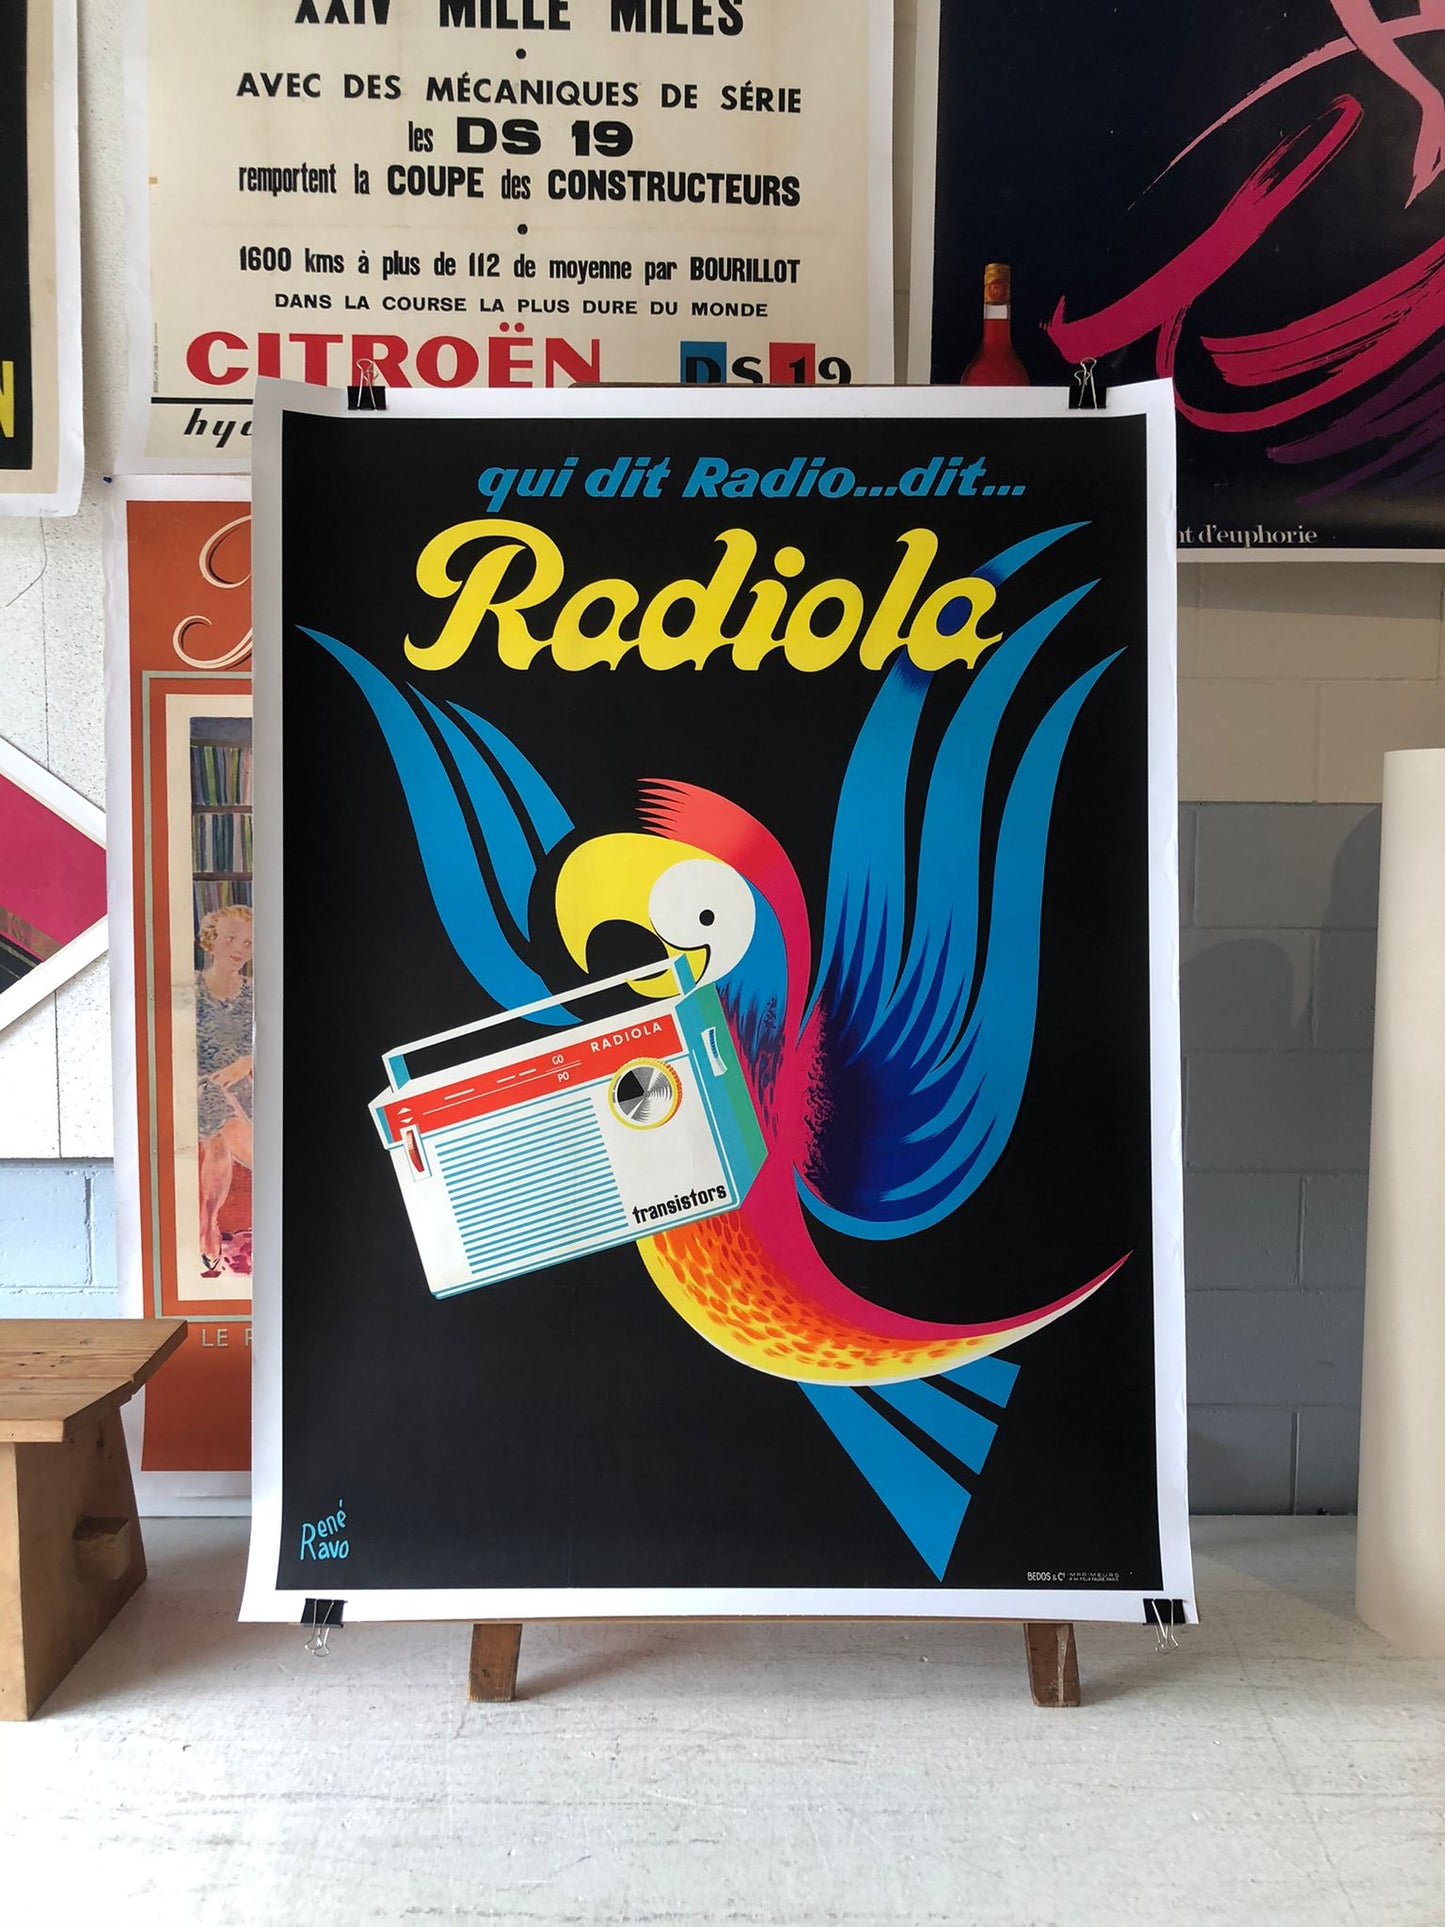 Radiola by Rene Ravo